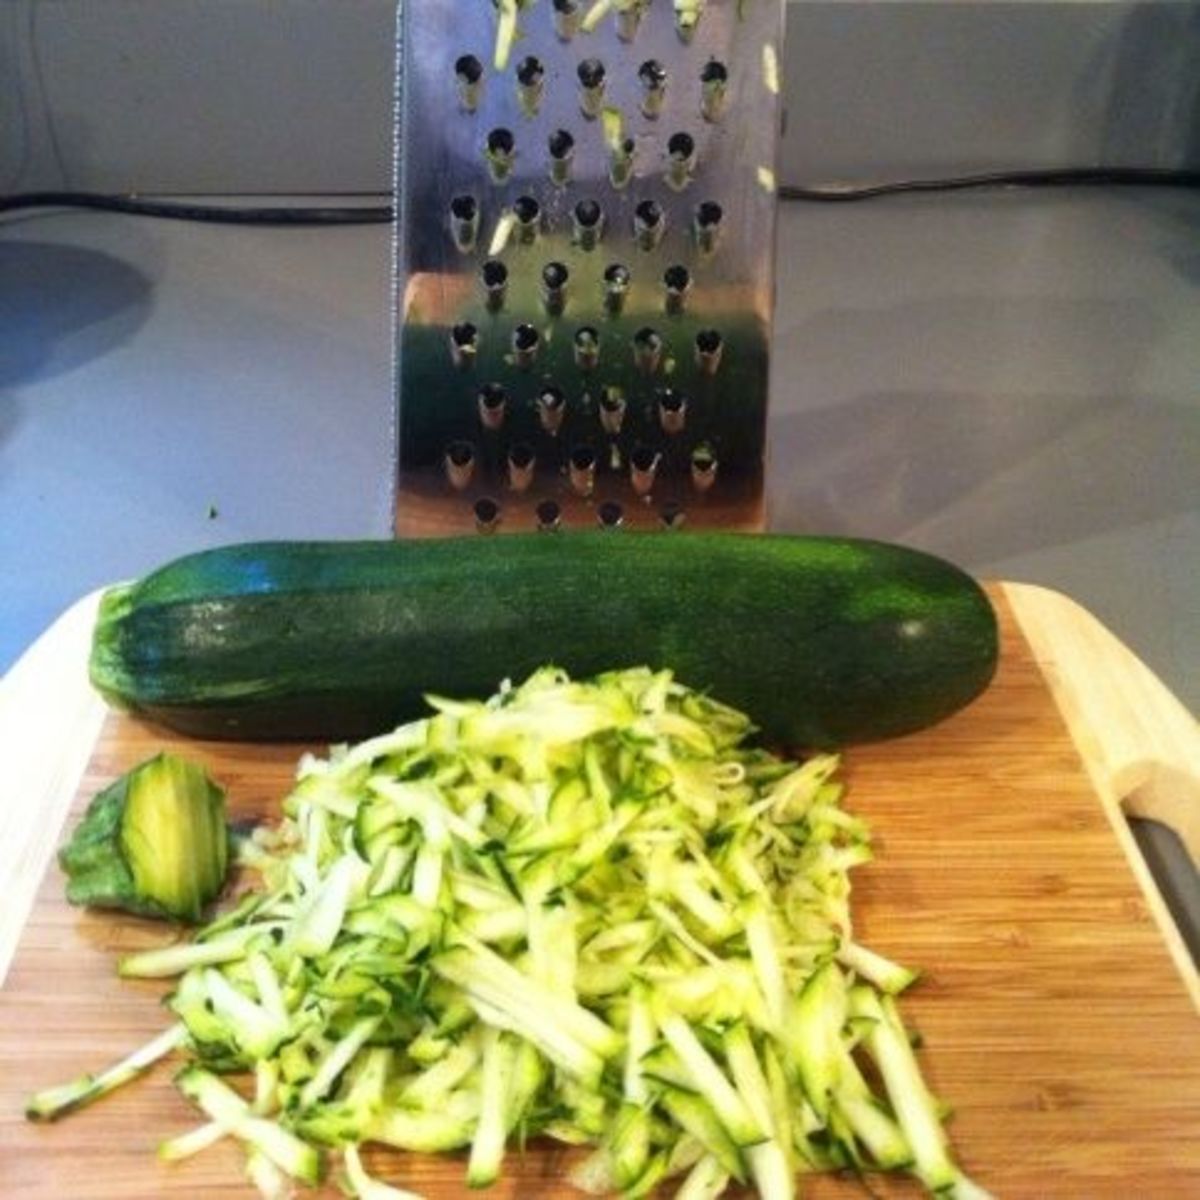 Preparing zucchini for freezing